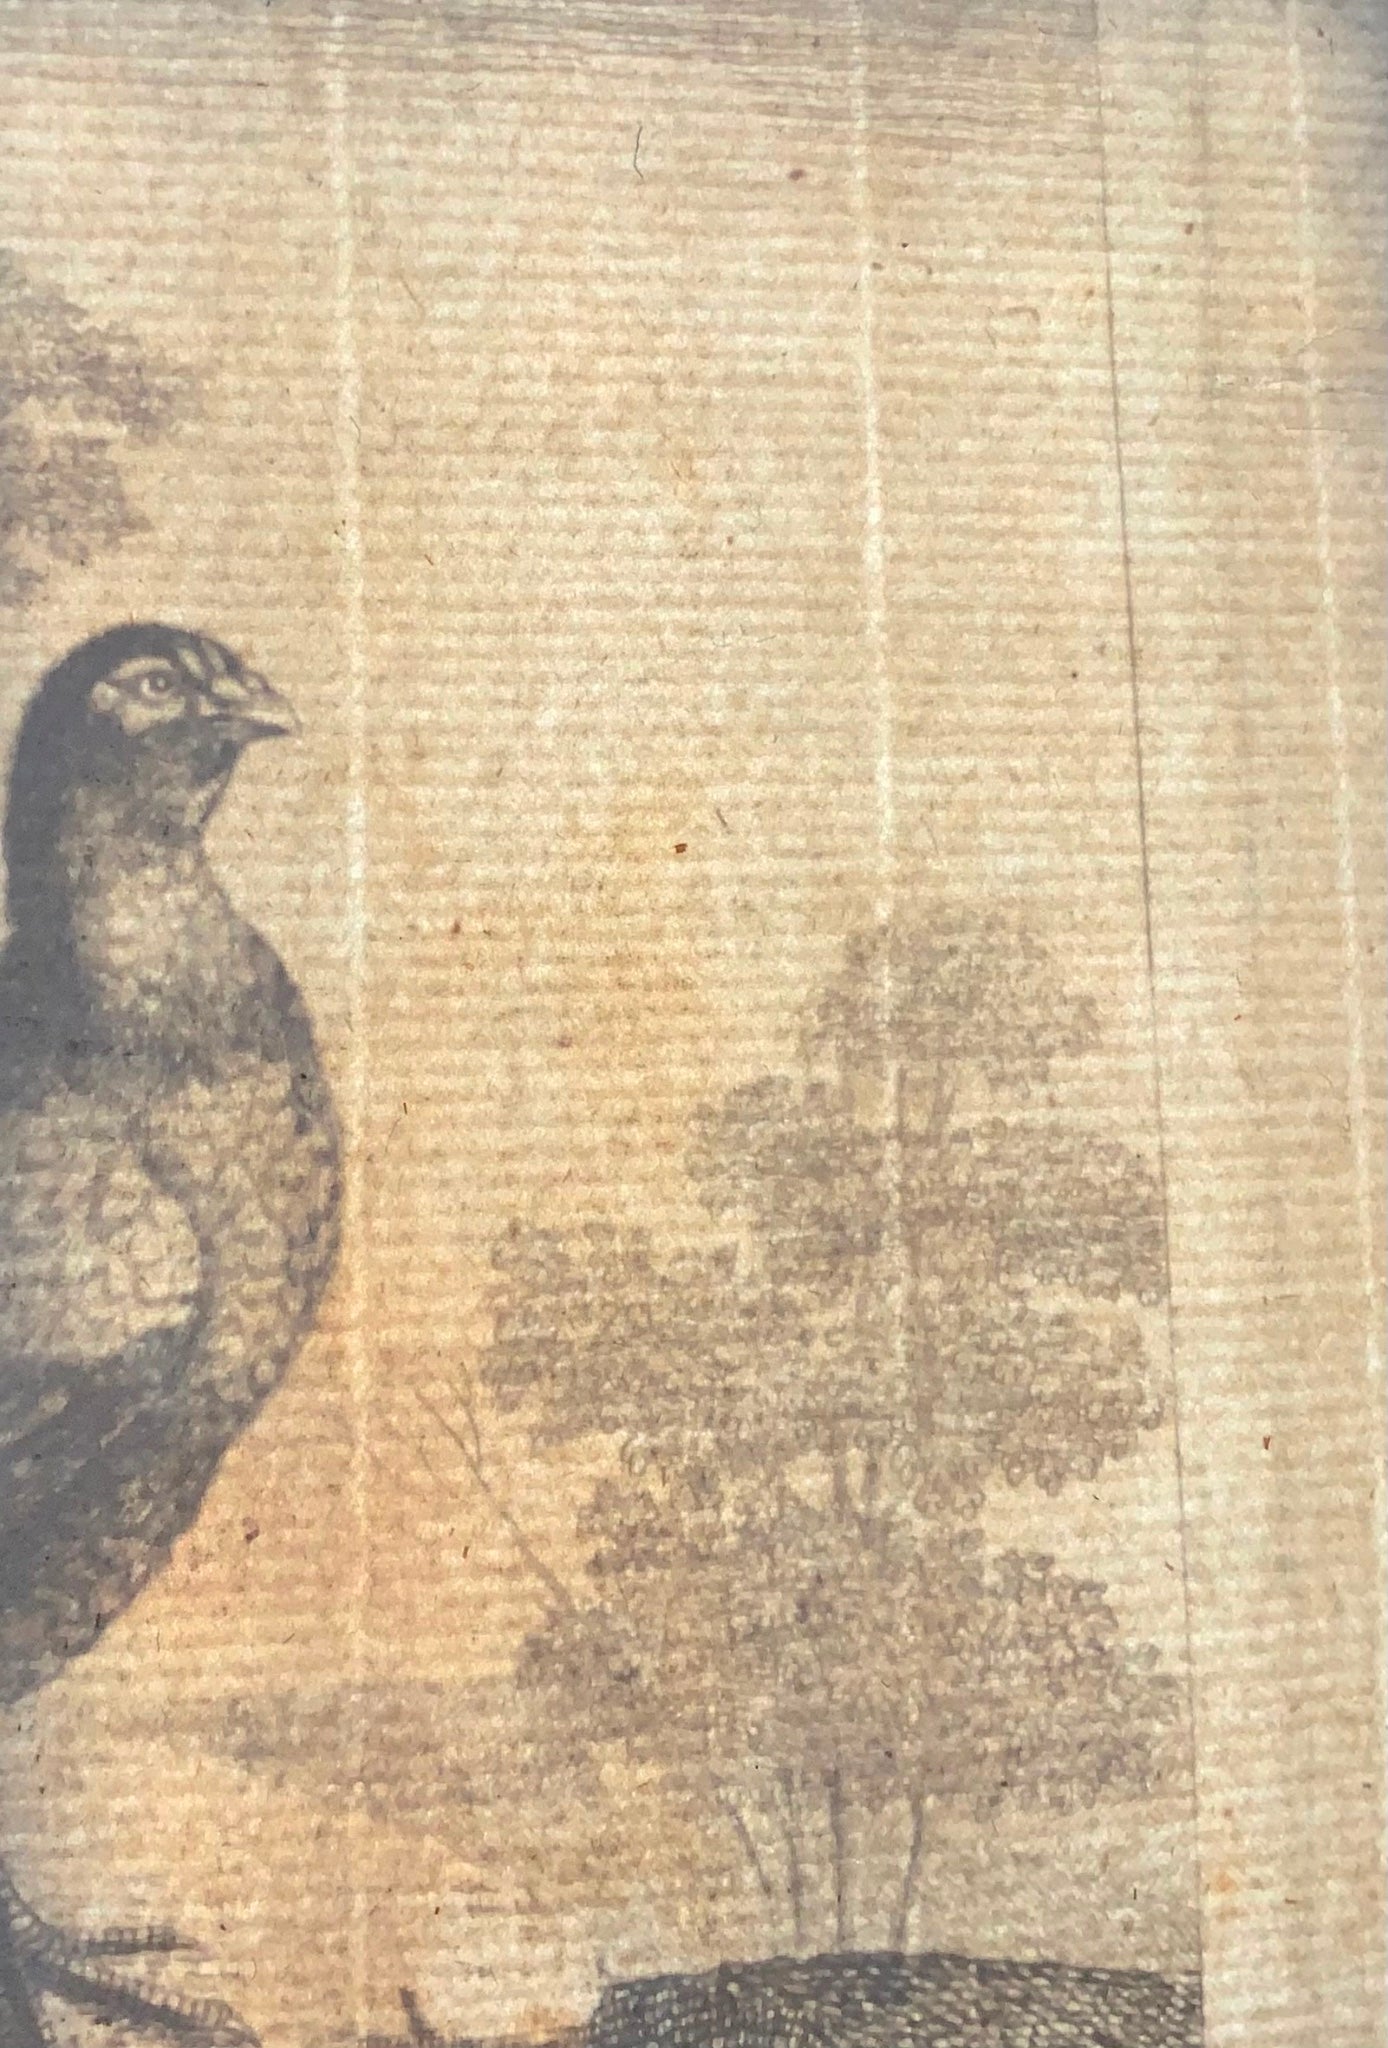 1660c Three pheasants, ornithology, Pieter van Lisebetten, fine etching